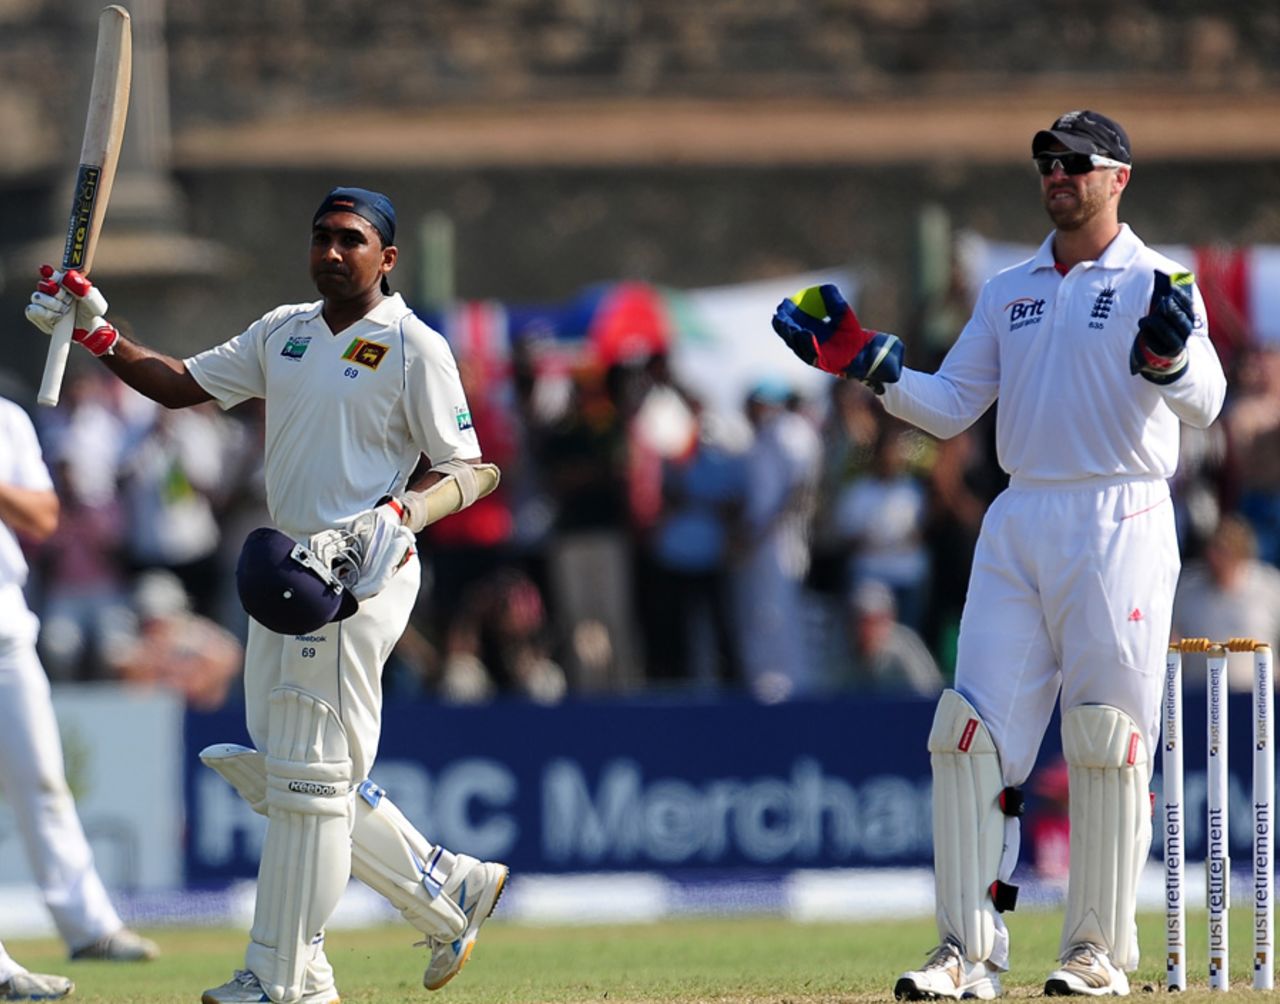 Mahela Jayawardene reaches his 30th Test hundred, Sri Lanka v England, 1st Test, Galle, 1st day, March 26, 2012